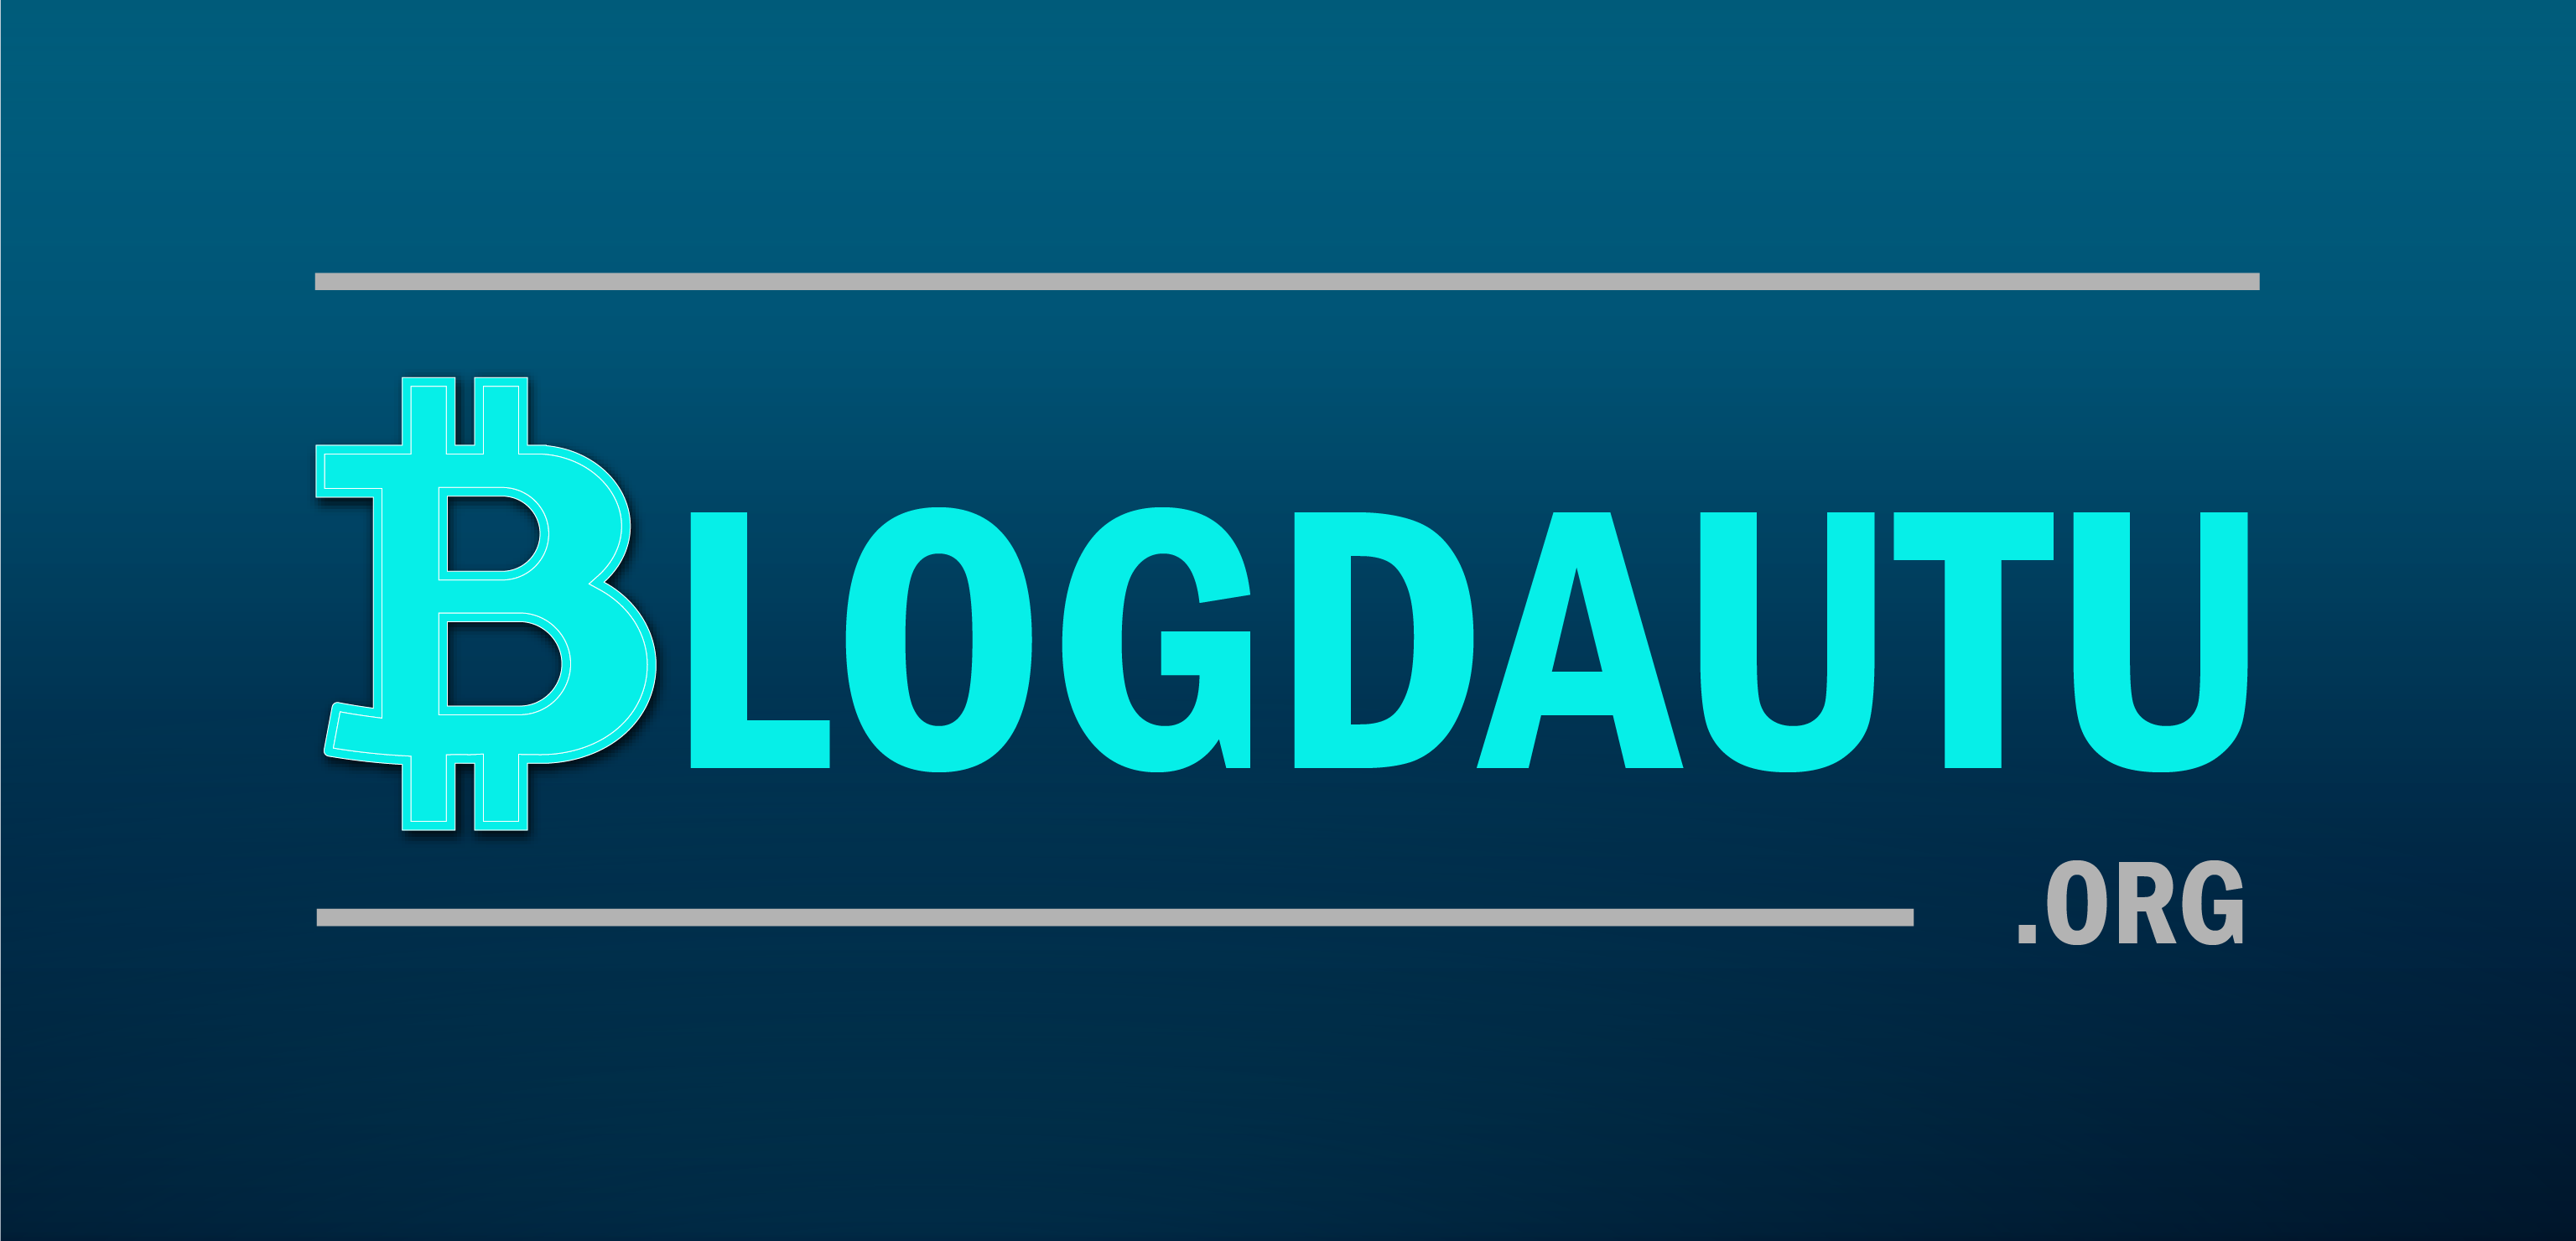 BlogDauTu.org